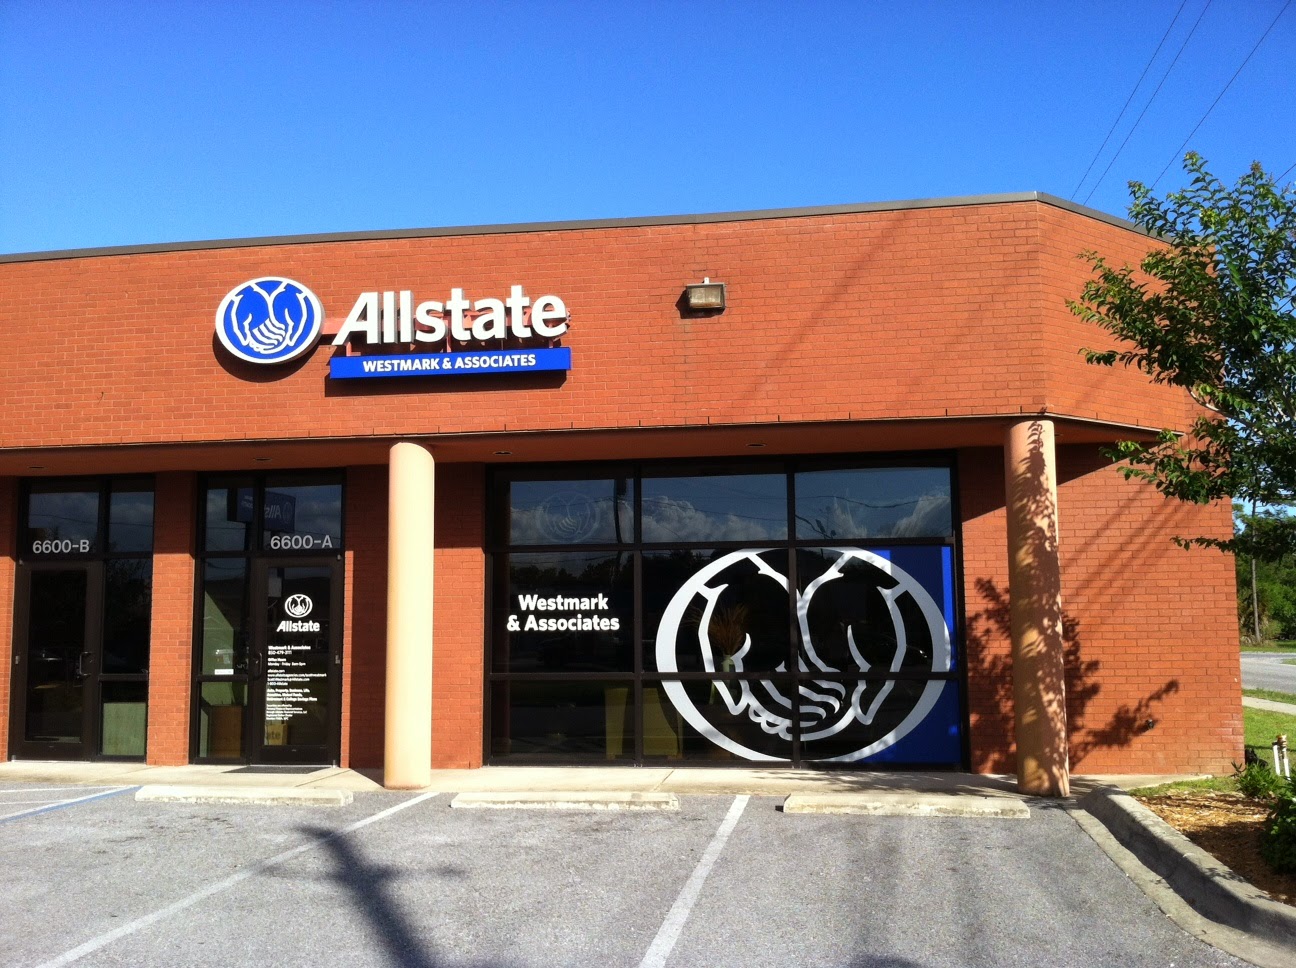 Westmark & Associates: Allstate Insurance